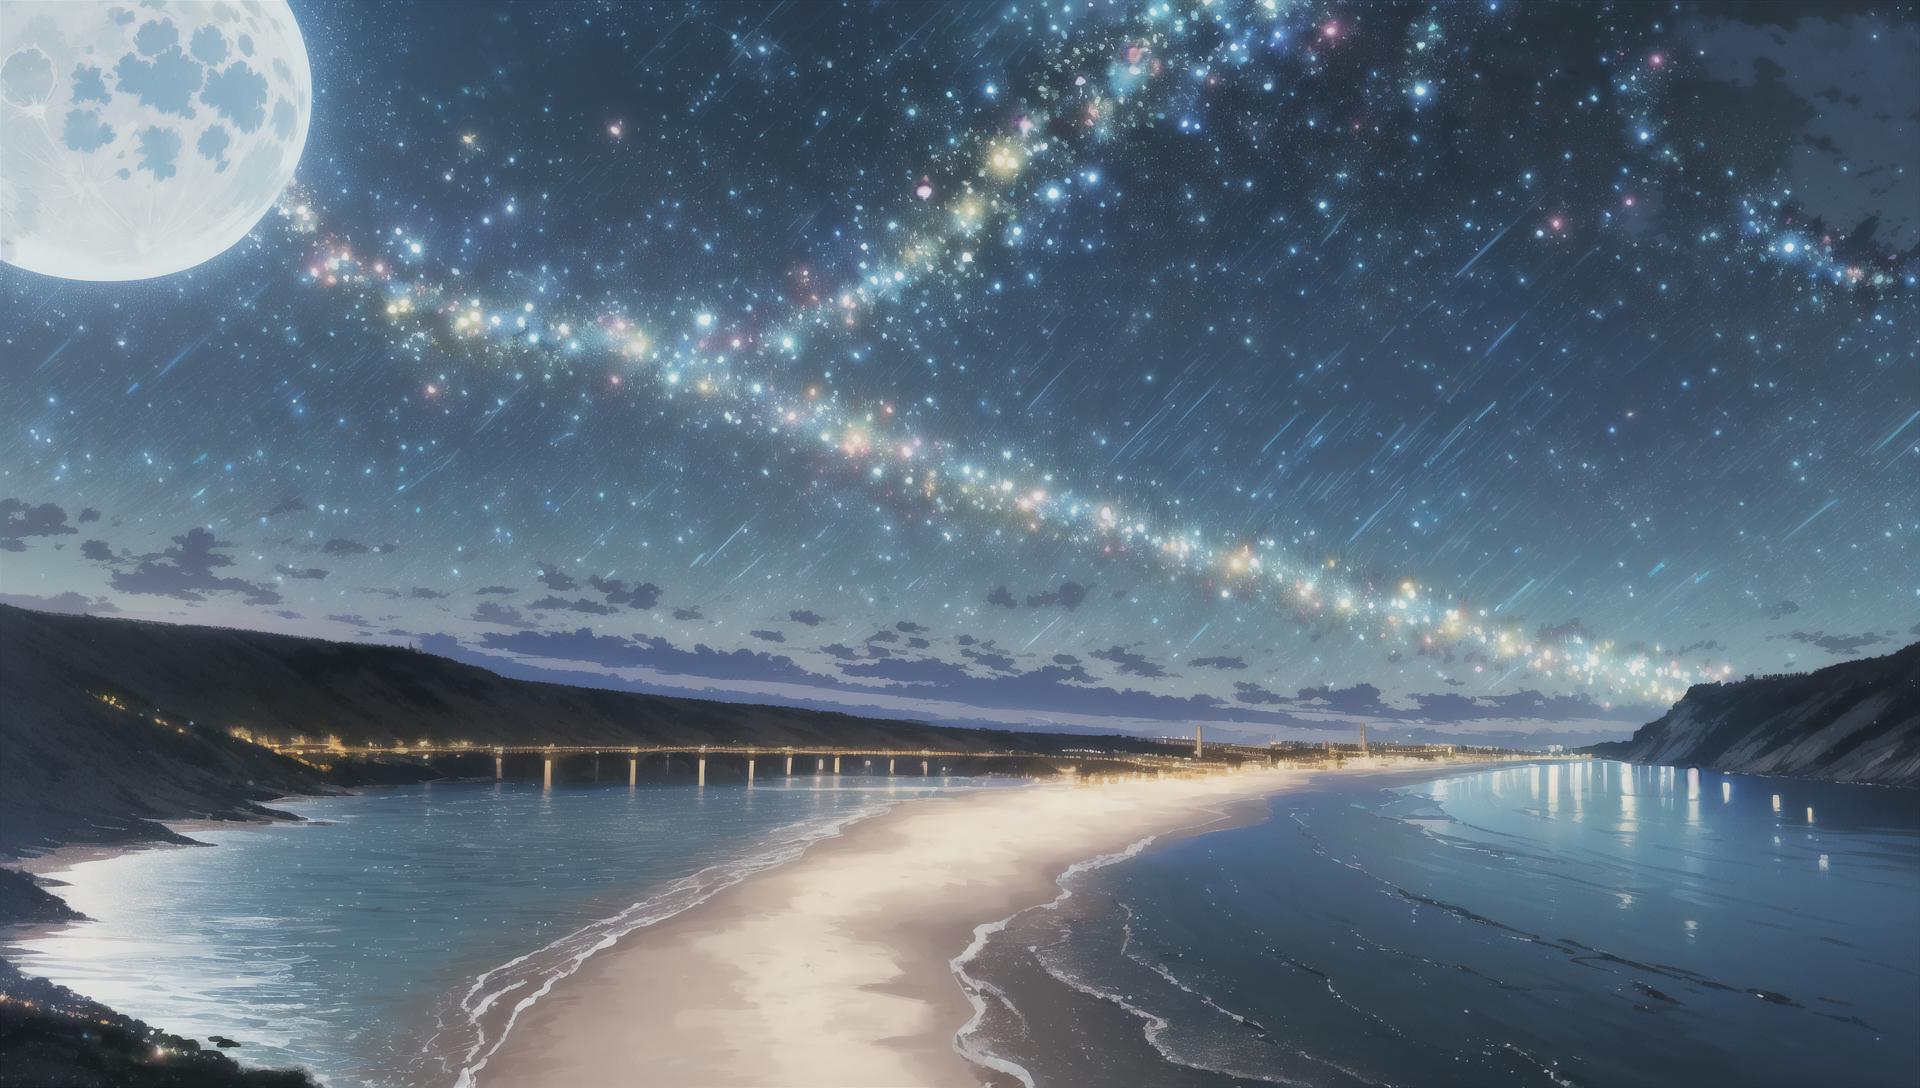 Beach Scenery At Night wallpaper | Beach scenery, Scenery background, Anime  scenery